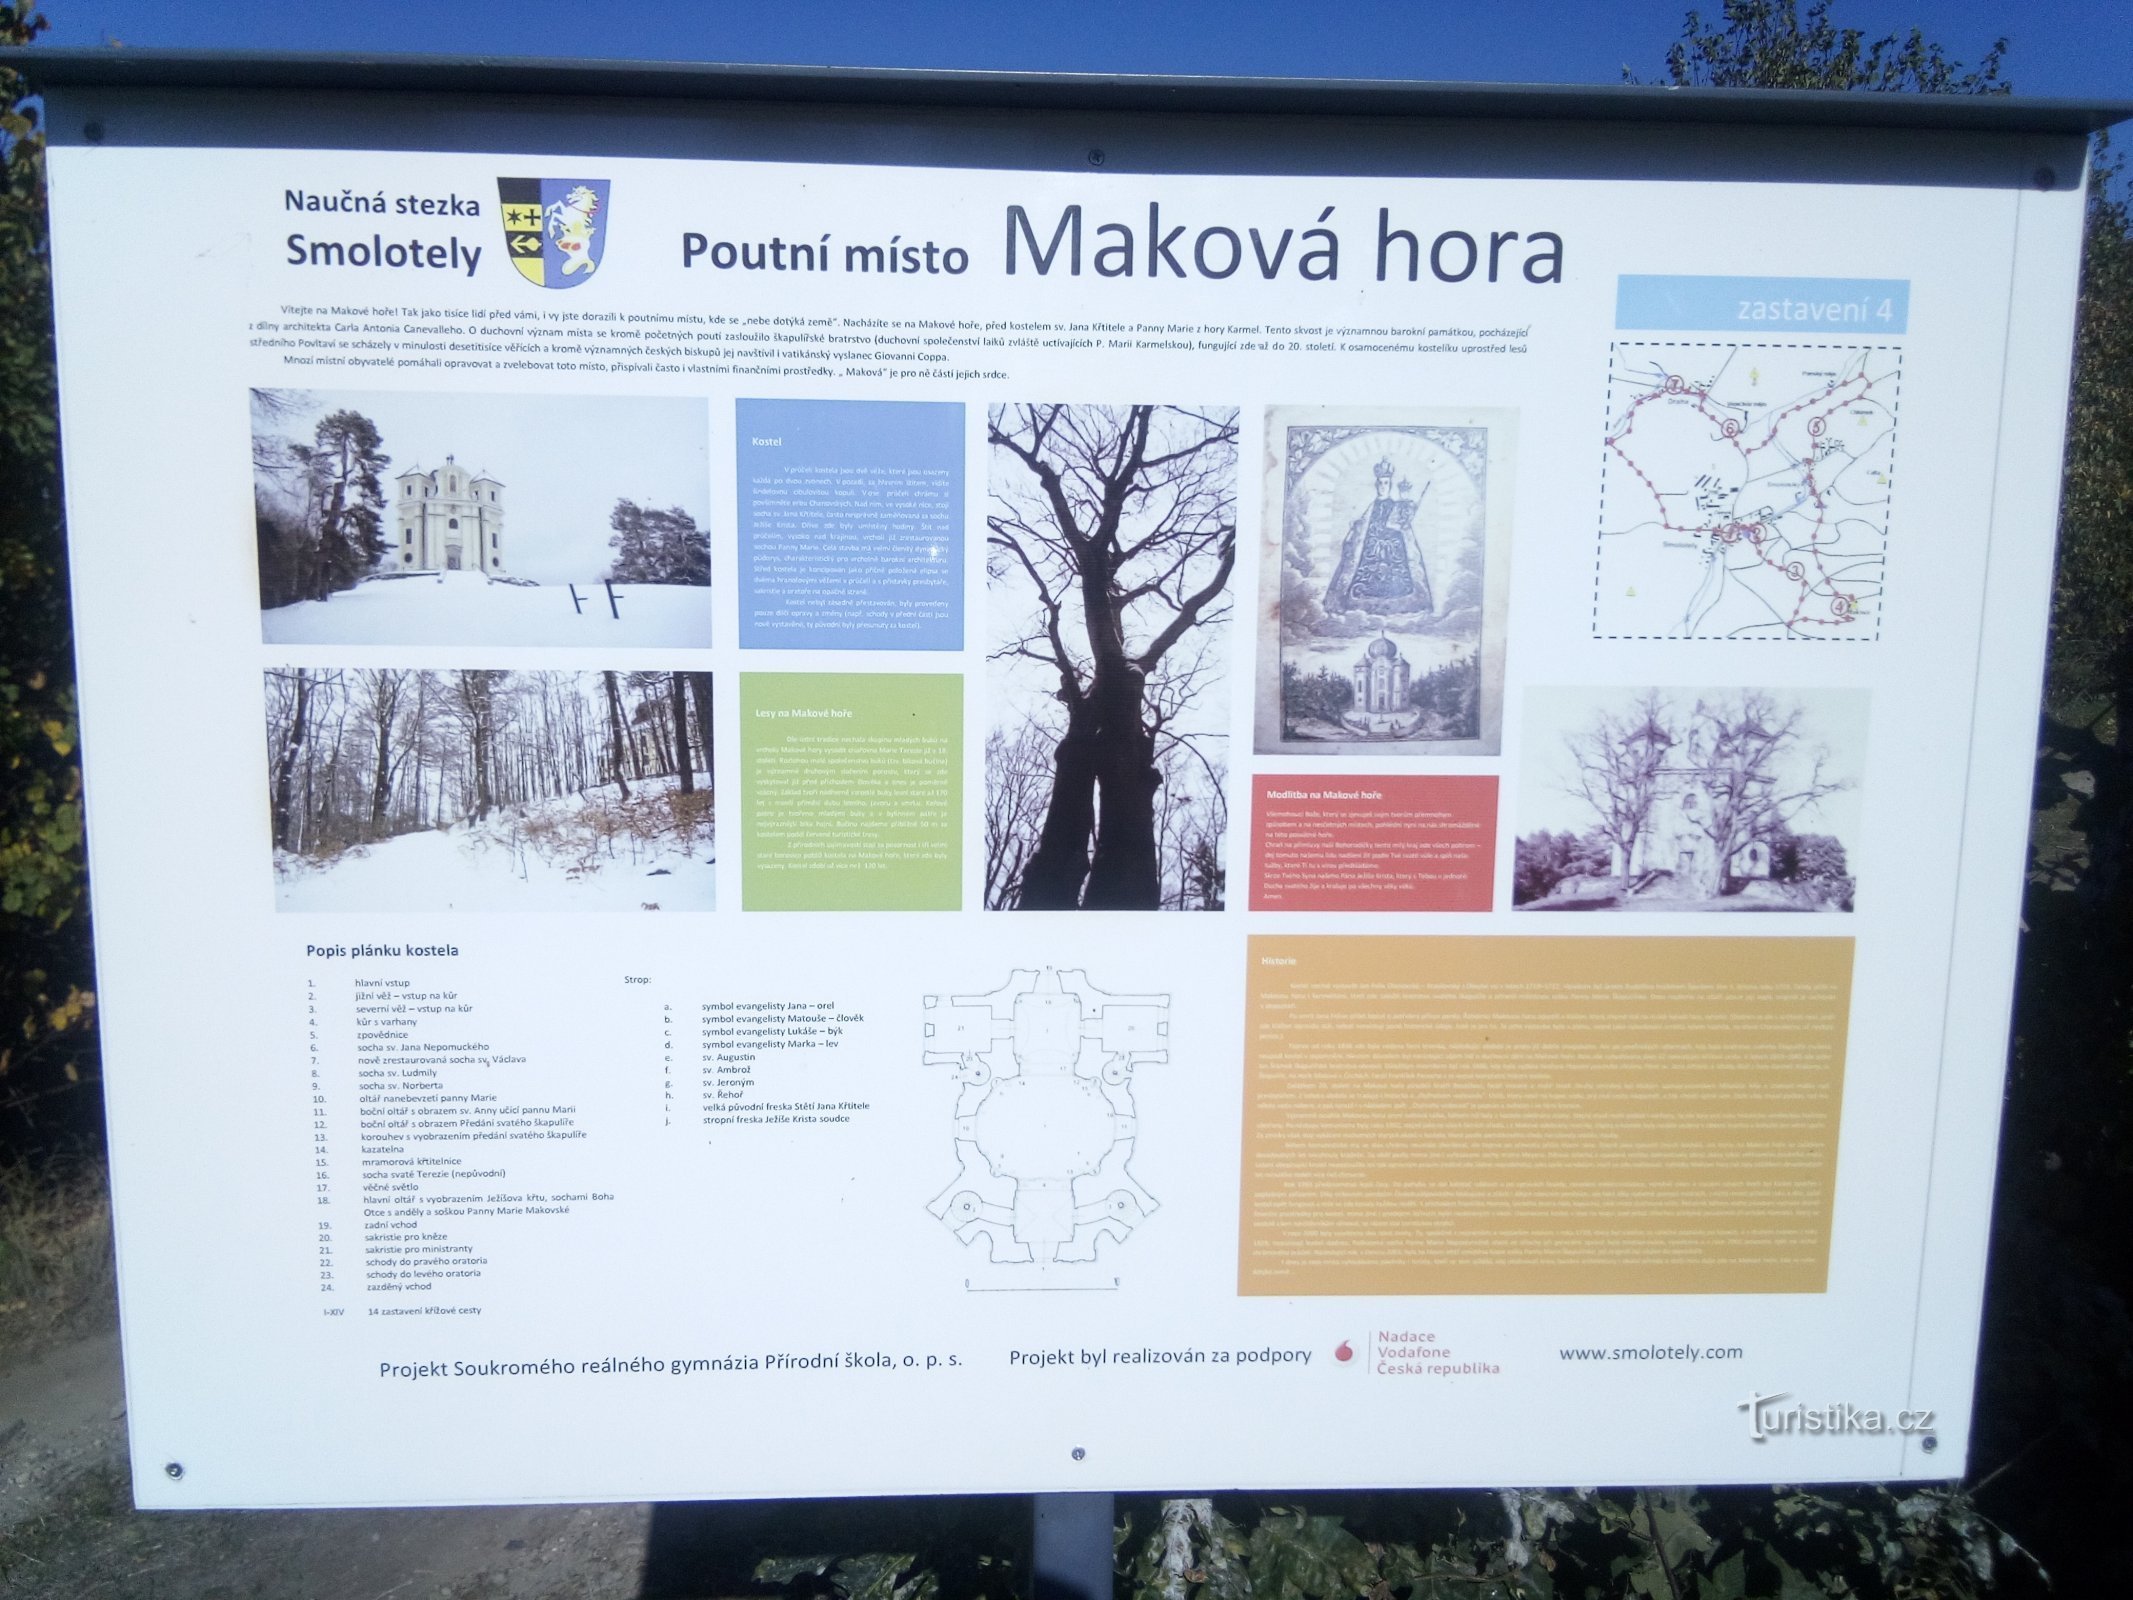 În jurul Smolotel prin Makova hora și belvederea Milada